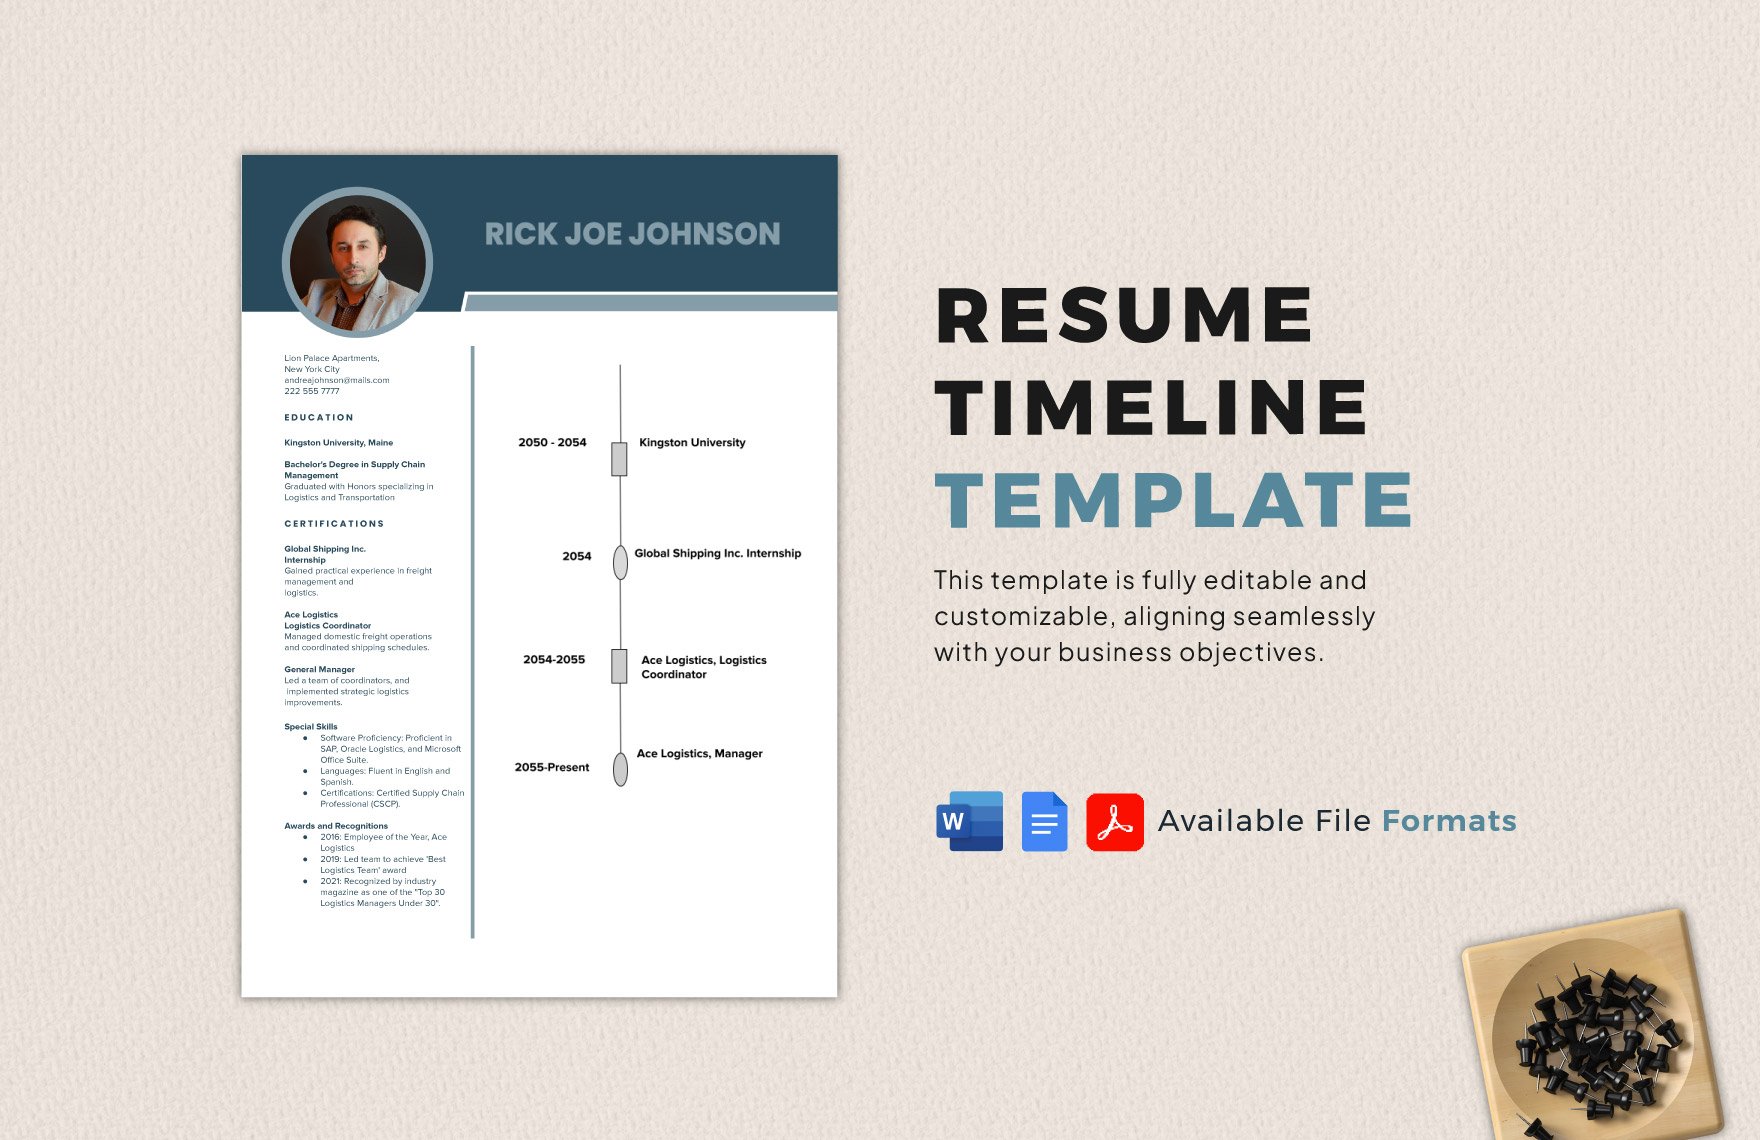 Resume Timeline Template